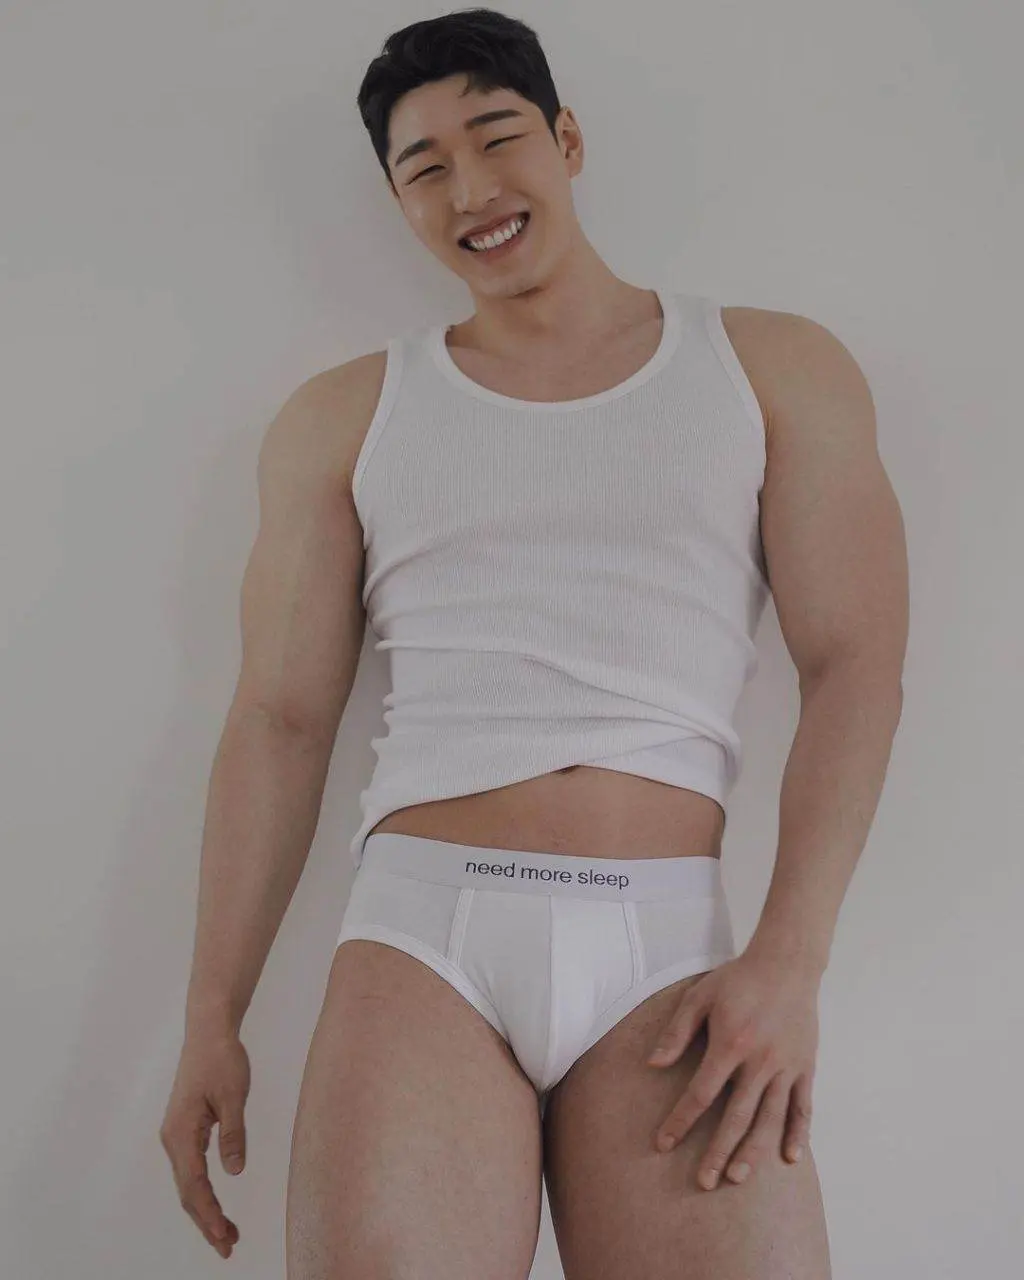 Hot men in underwear 646